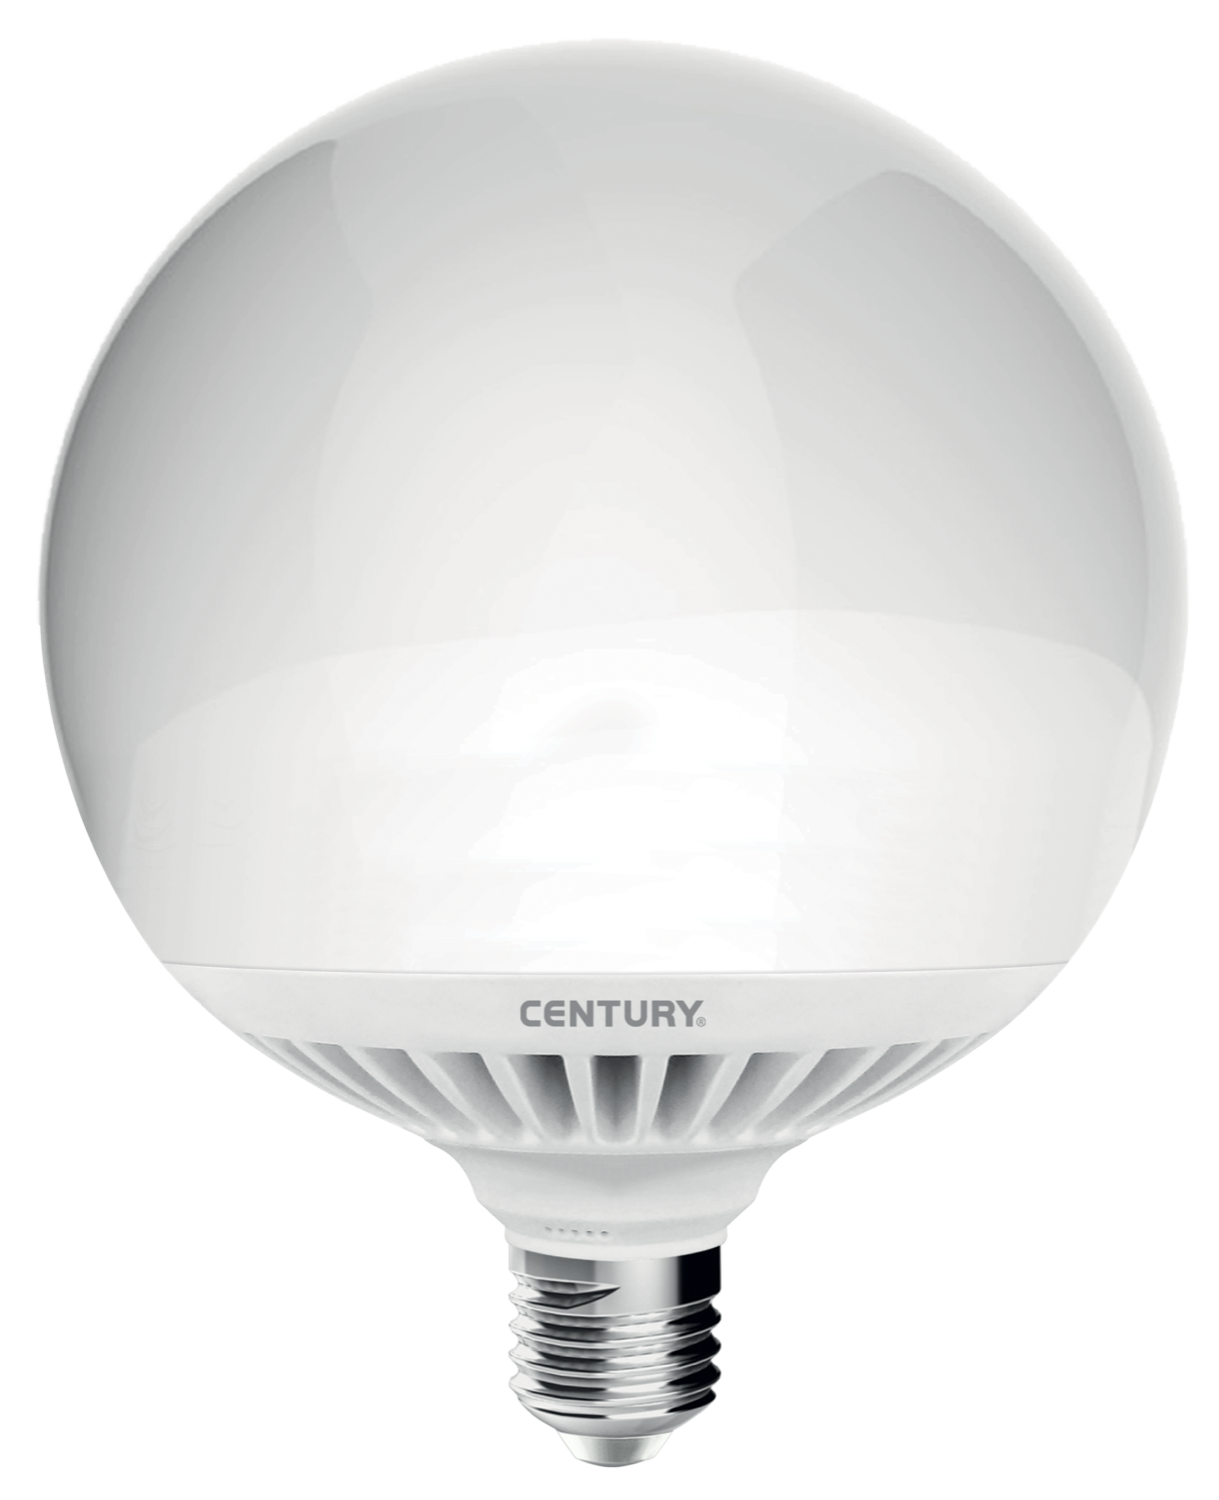 LED GLOBE 24W E27 G130 CENTURY, studená bílá LED koule 4000K, SOFTONE G130, 310°, ARB-242740